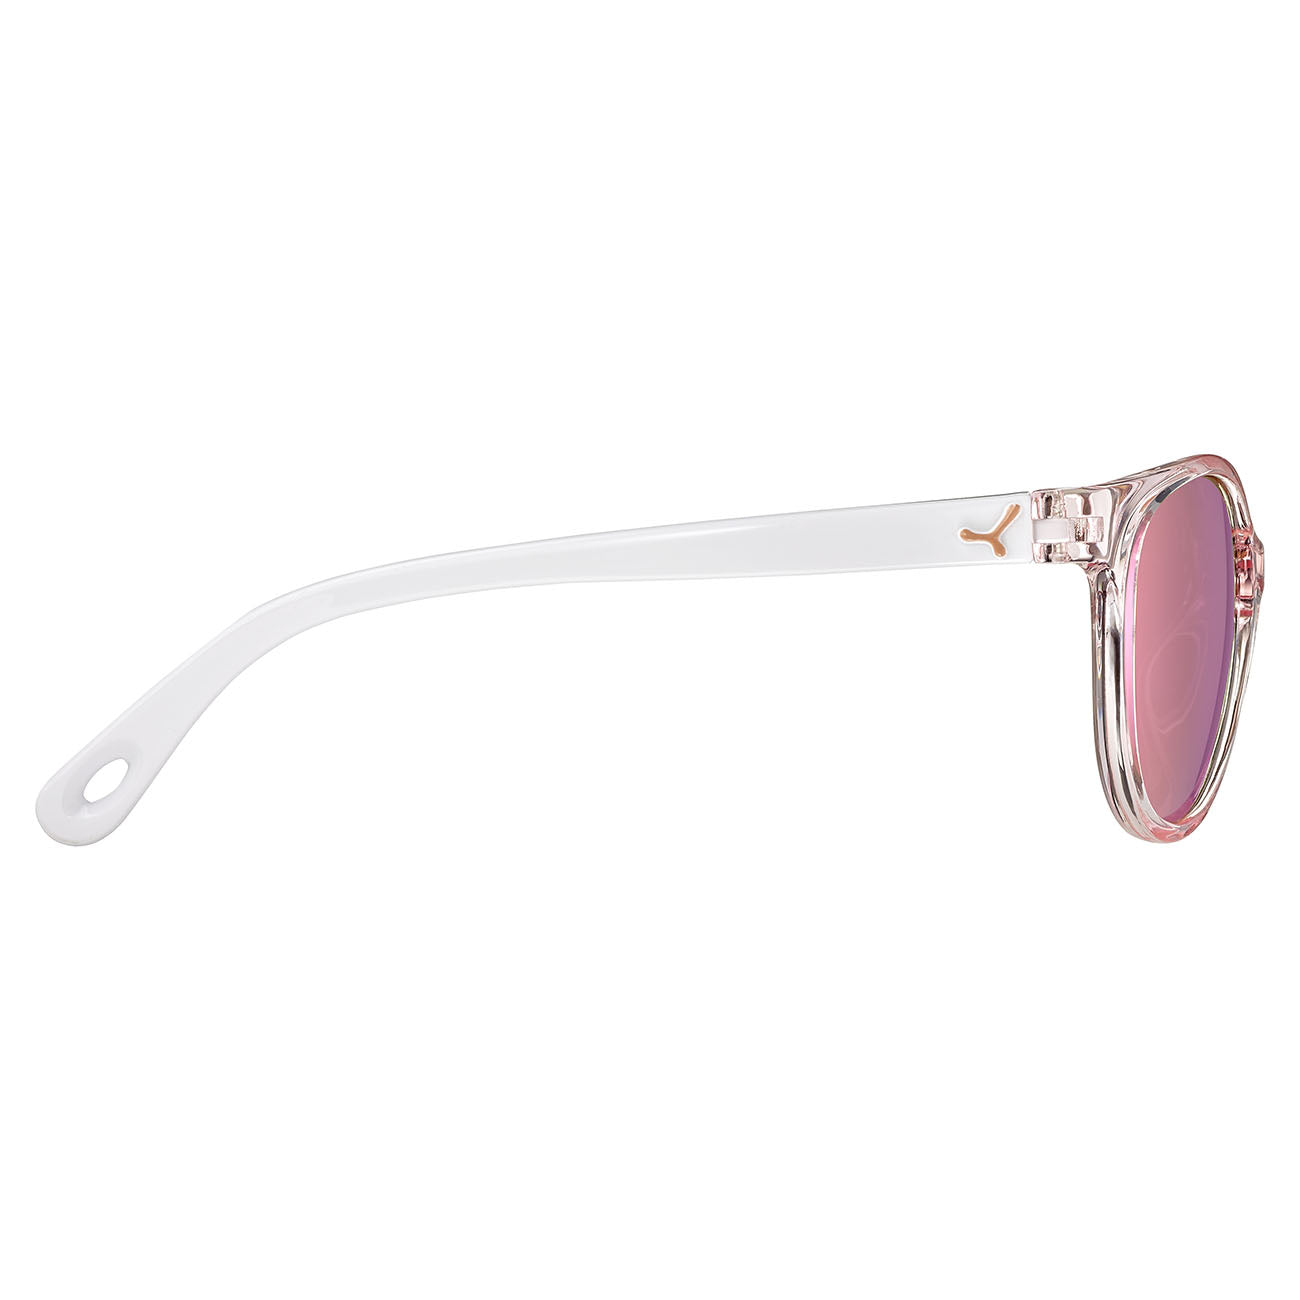 Cebe Junior ELLA CBS125 Sunglasses - White Blush Shiny - Zone Blue Light Grey Cat.3 Pink